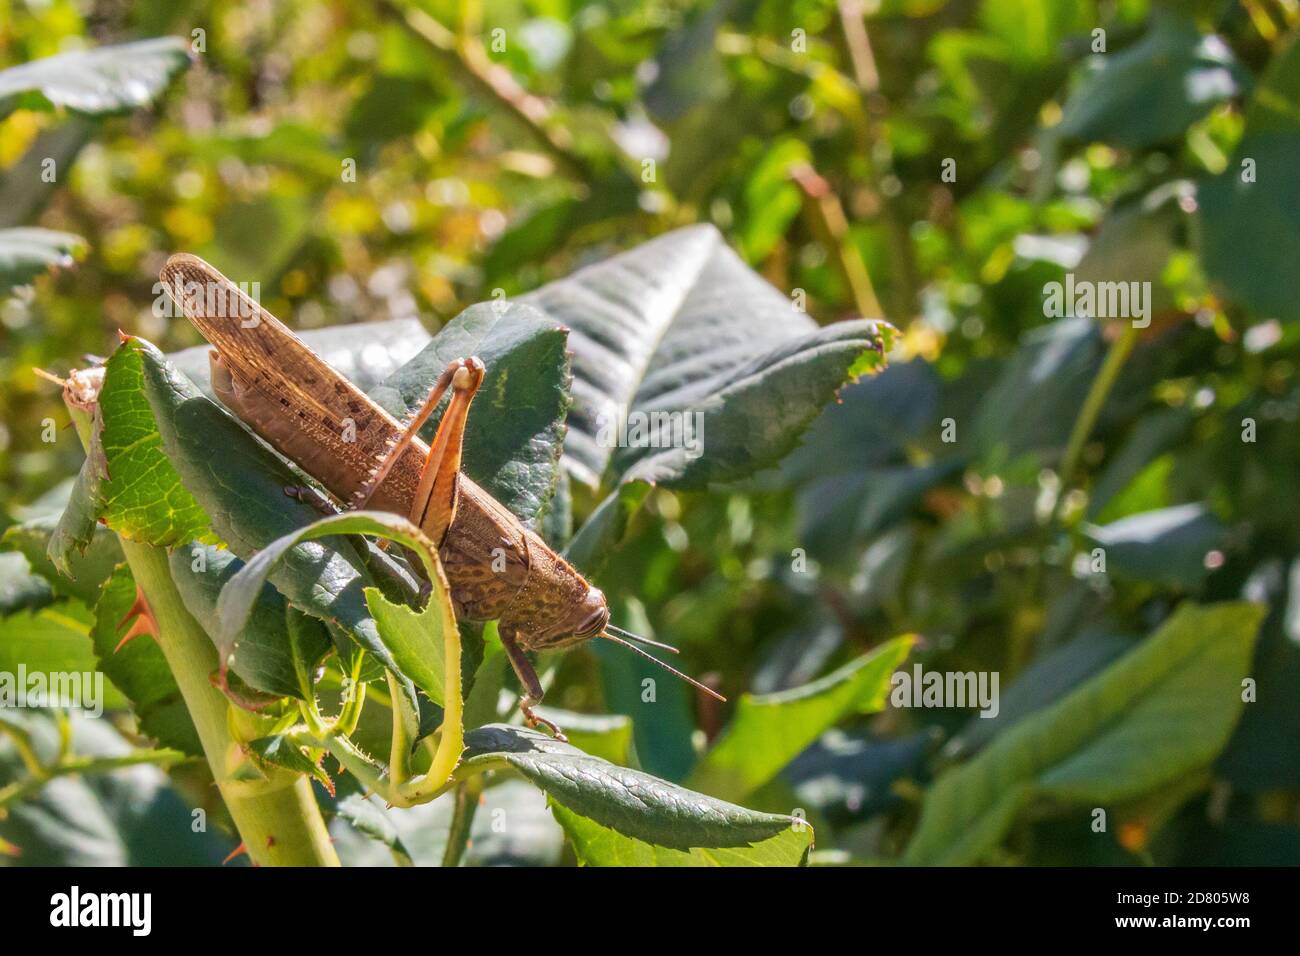 Anacridium aegyptium, Egyptian grasshopper Eating a Leaf on a Rose Bush Stock Photo